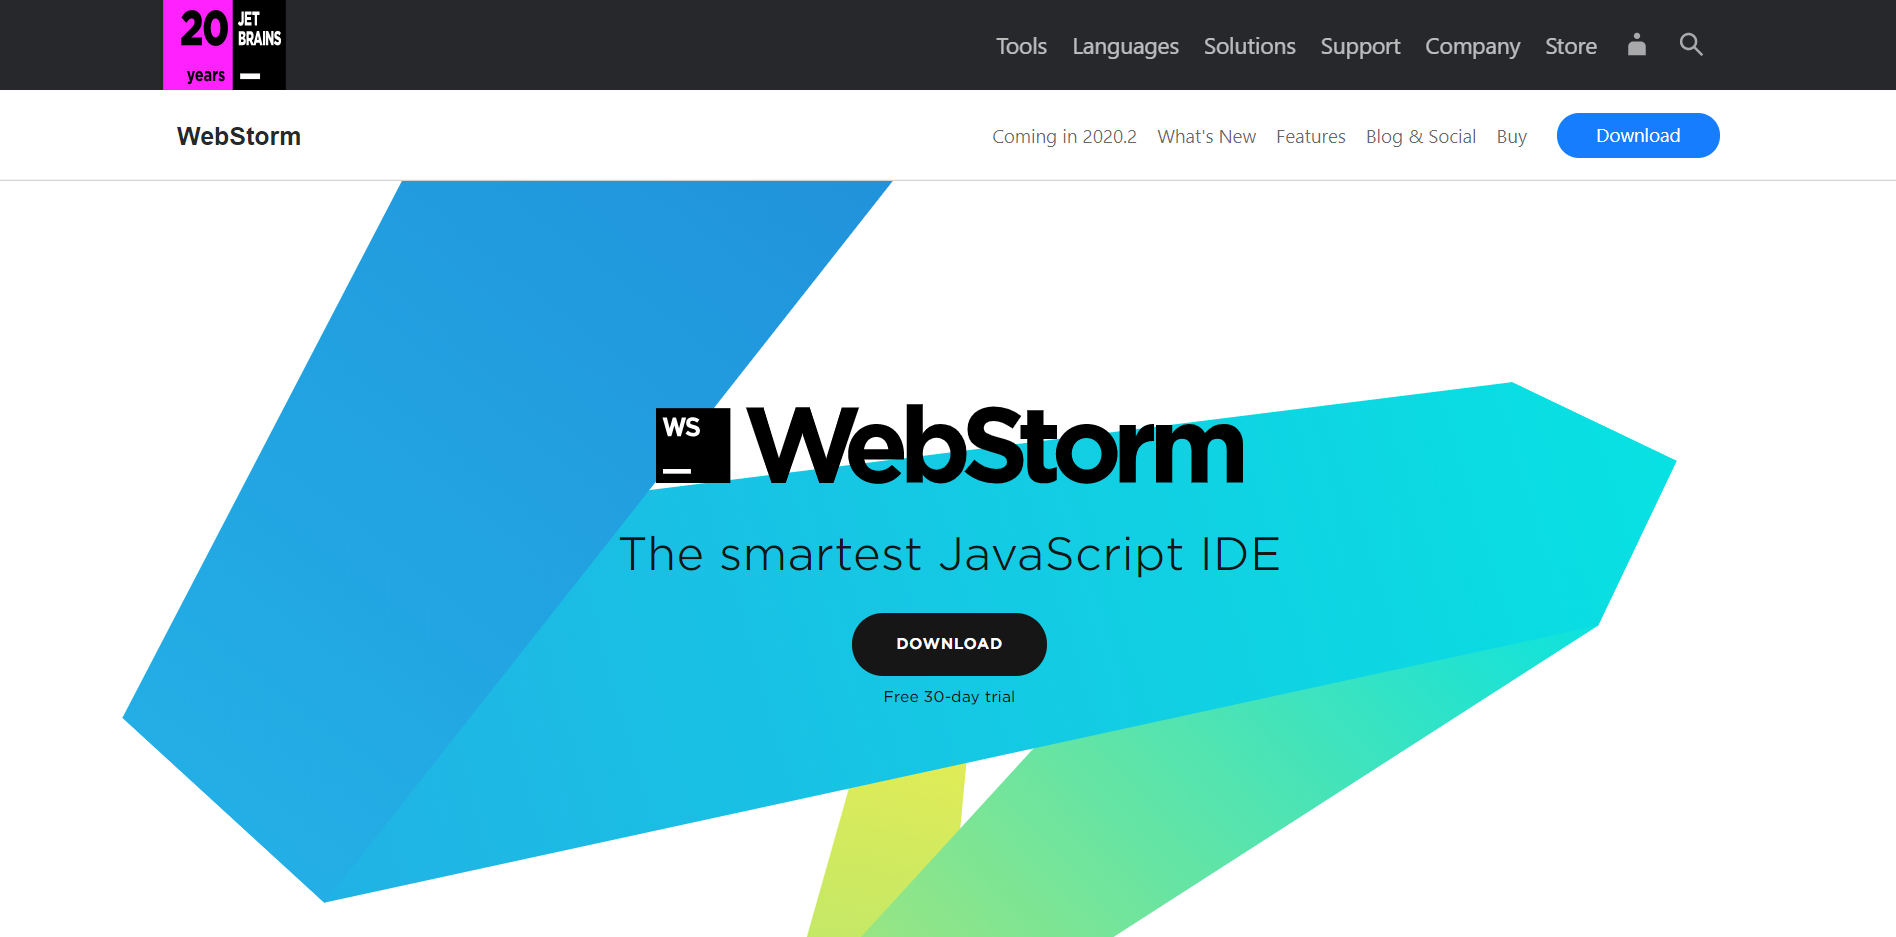 WebStorm landing page